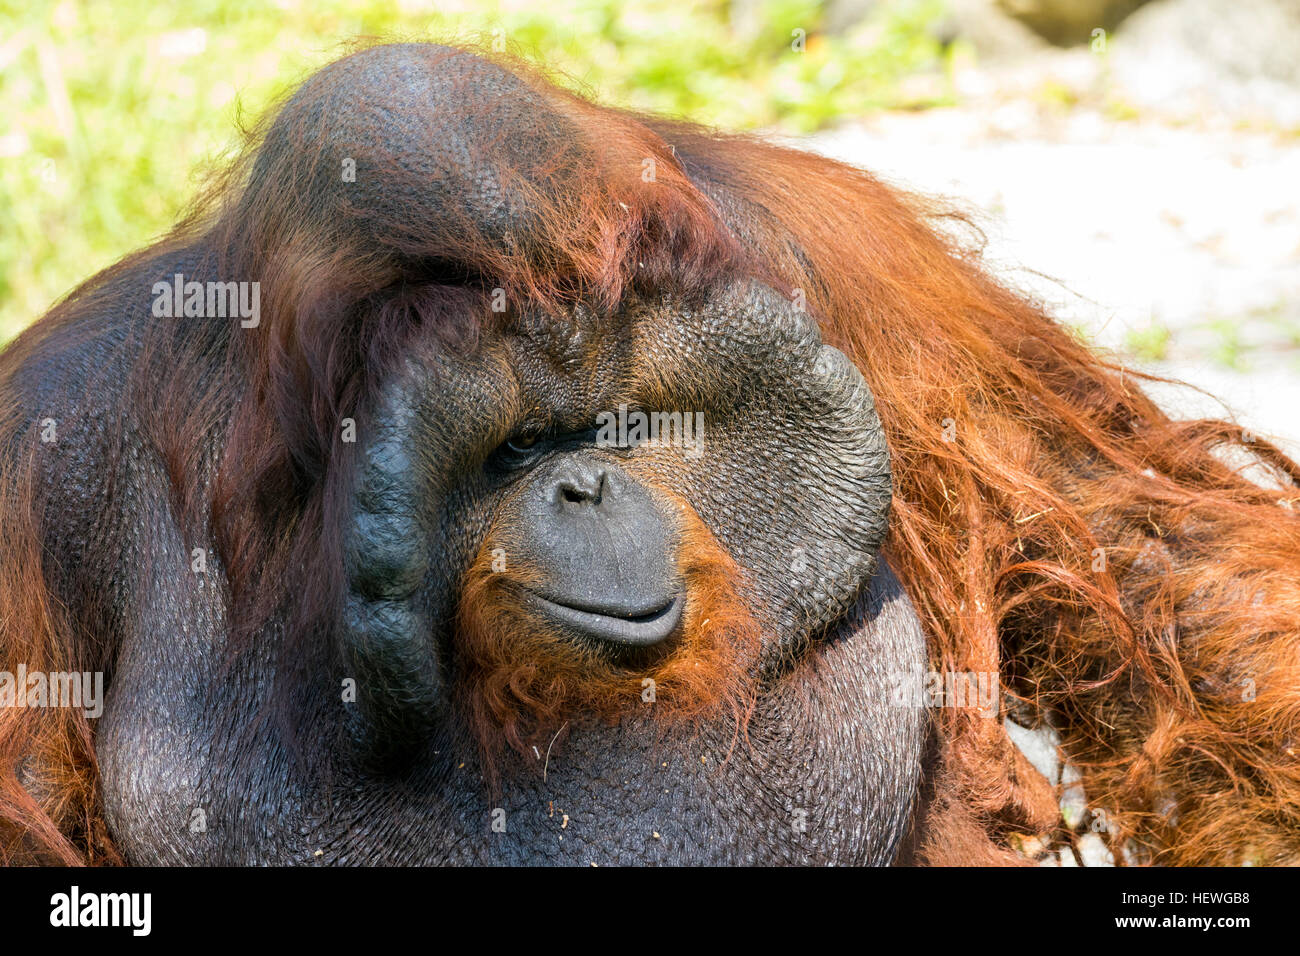 Image of a big male orangutan orange monkey. Wild Animals. Stock Photo